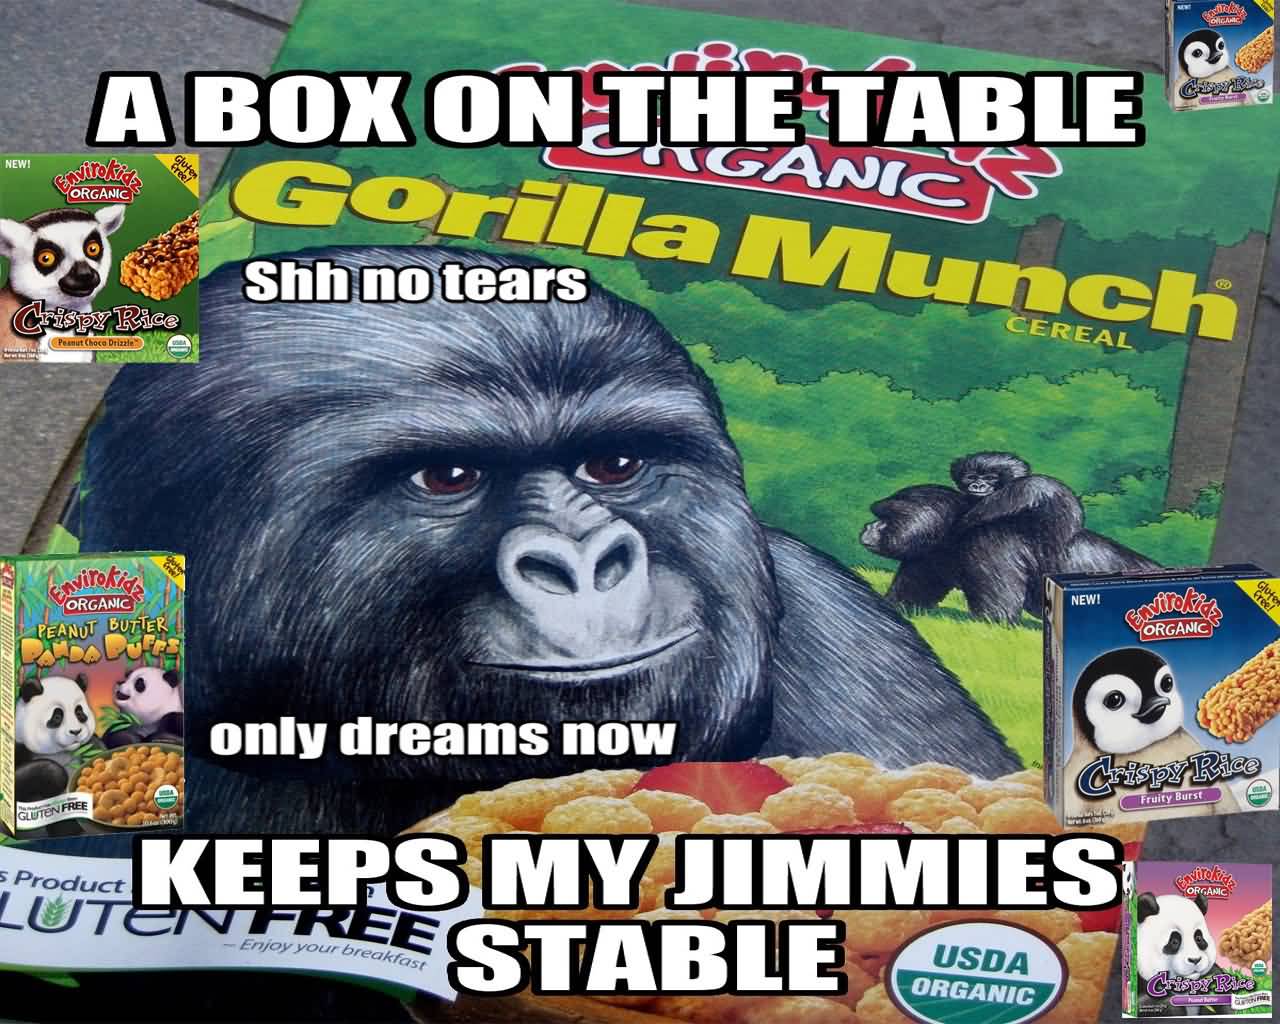 Gorilla Munch Meme Funny Image Photo Joke 12